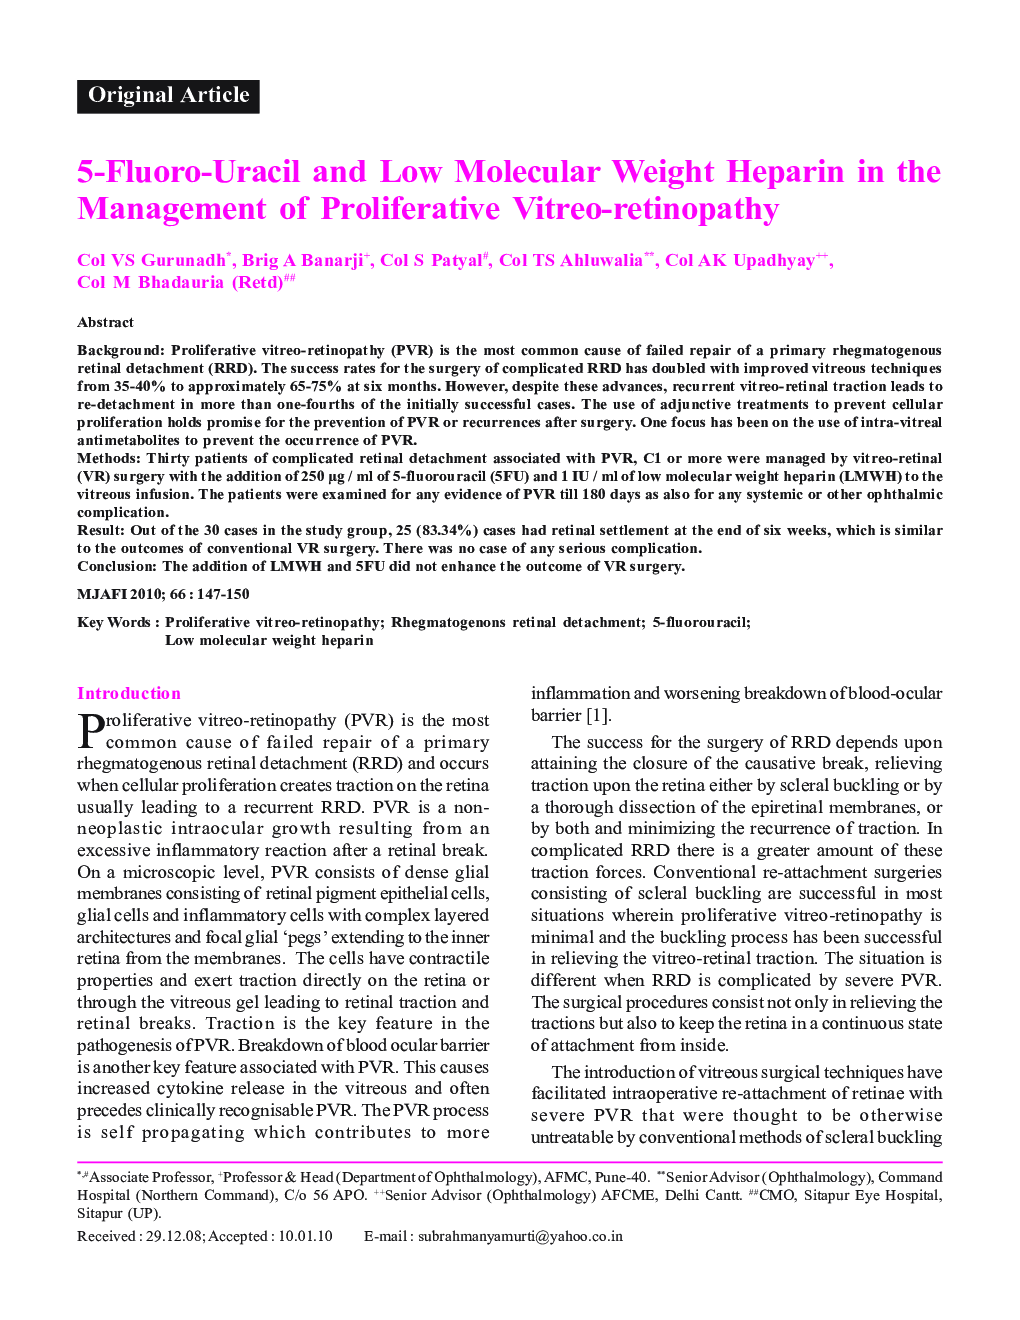 5-Fluoro-Uracil and Low Molecular Weight Heparin in the Management of Proliferative Vitreo-retinopathy